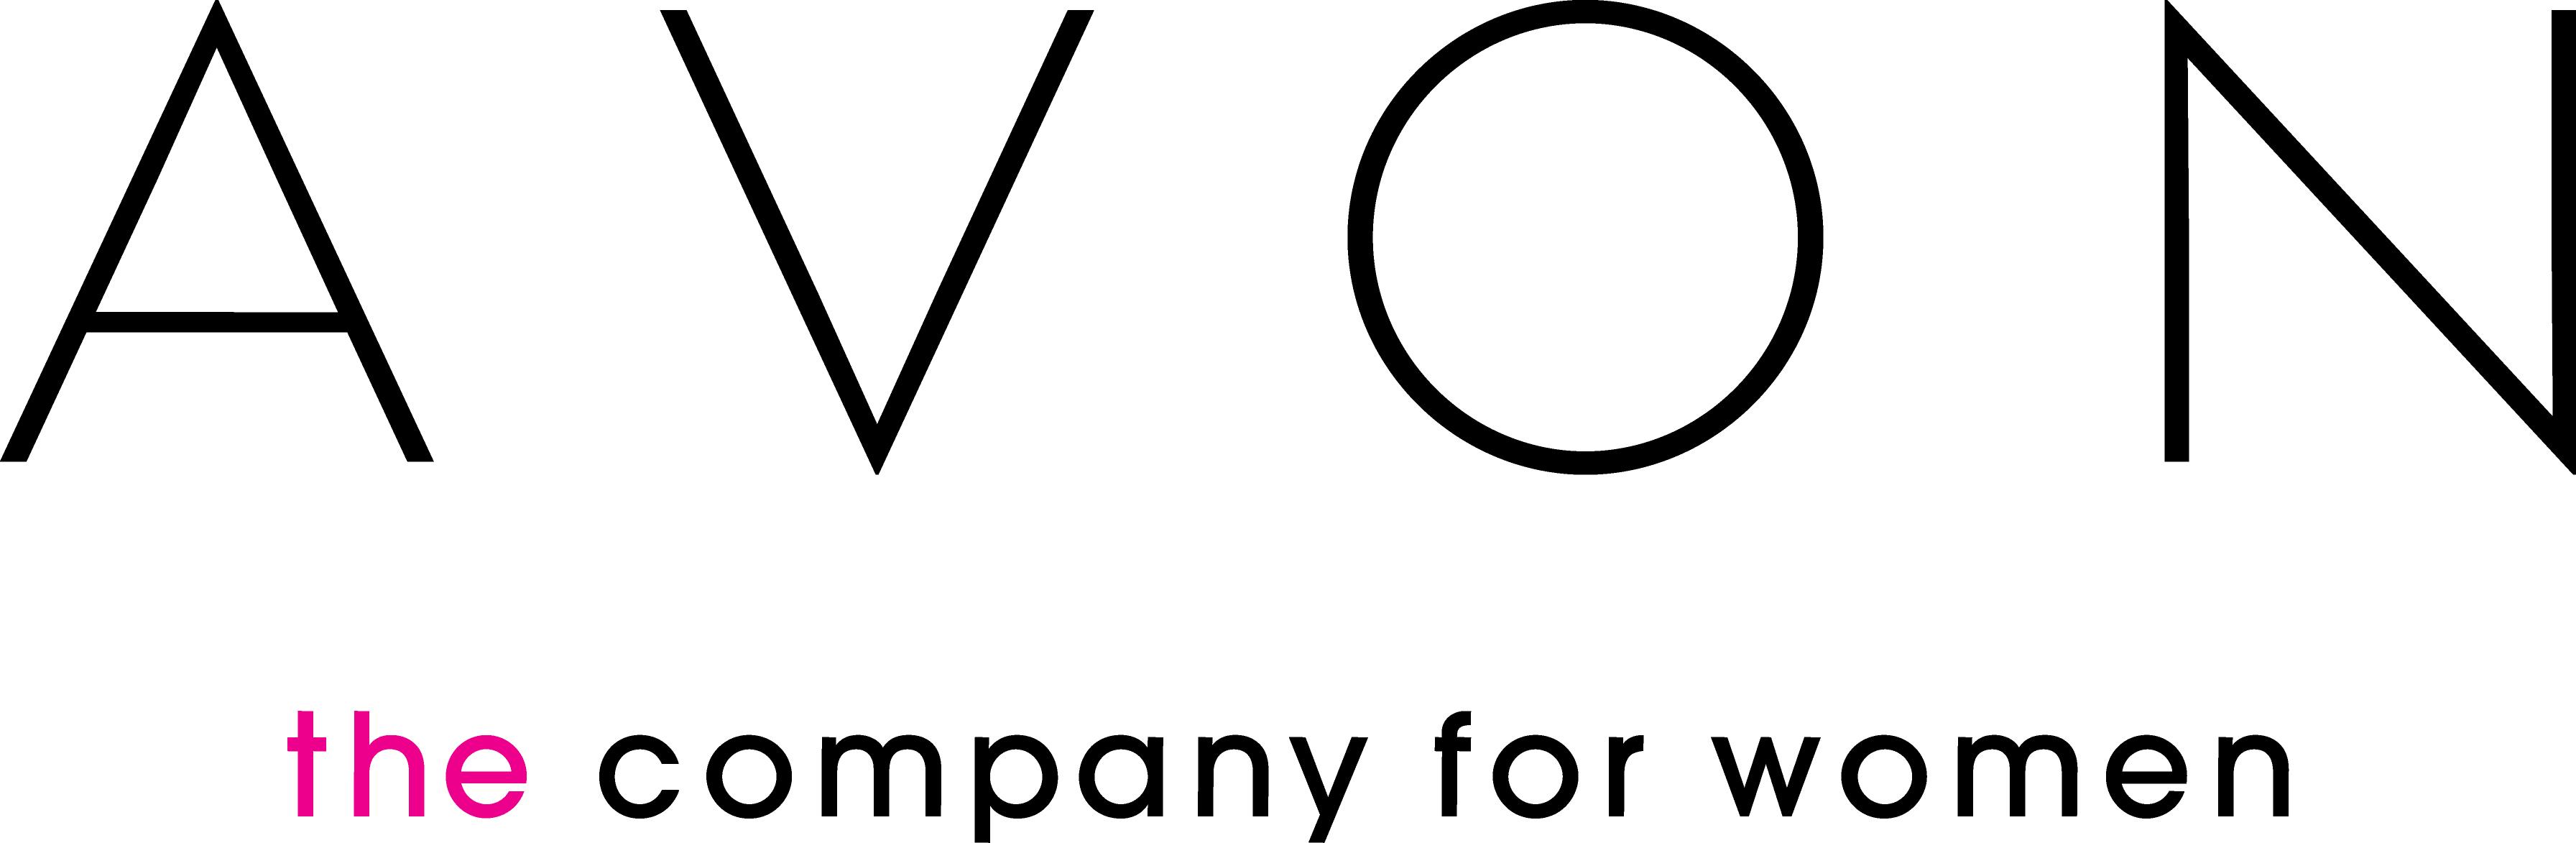 Avon Logo - Avon the company for women logo - Womens Aid